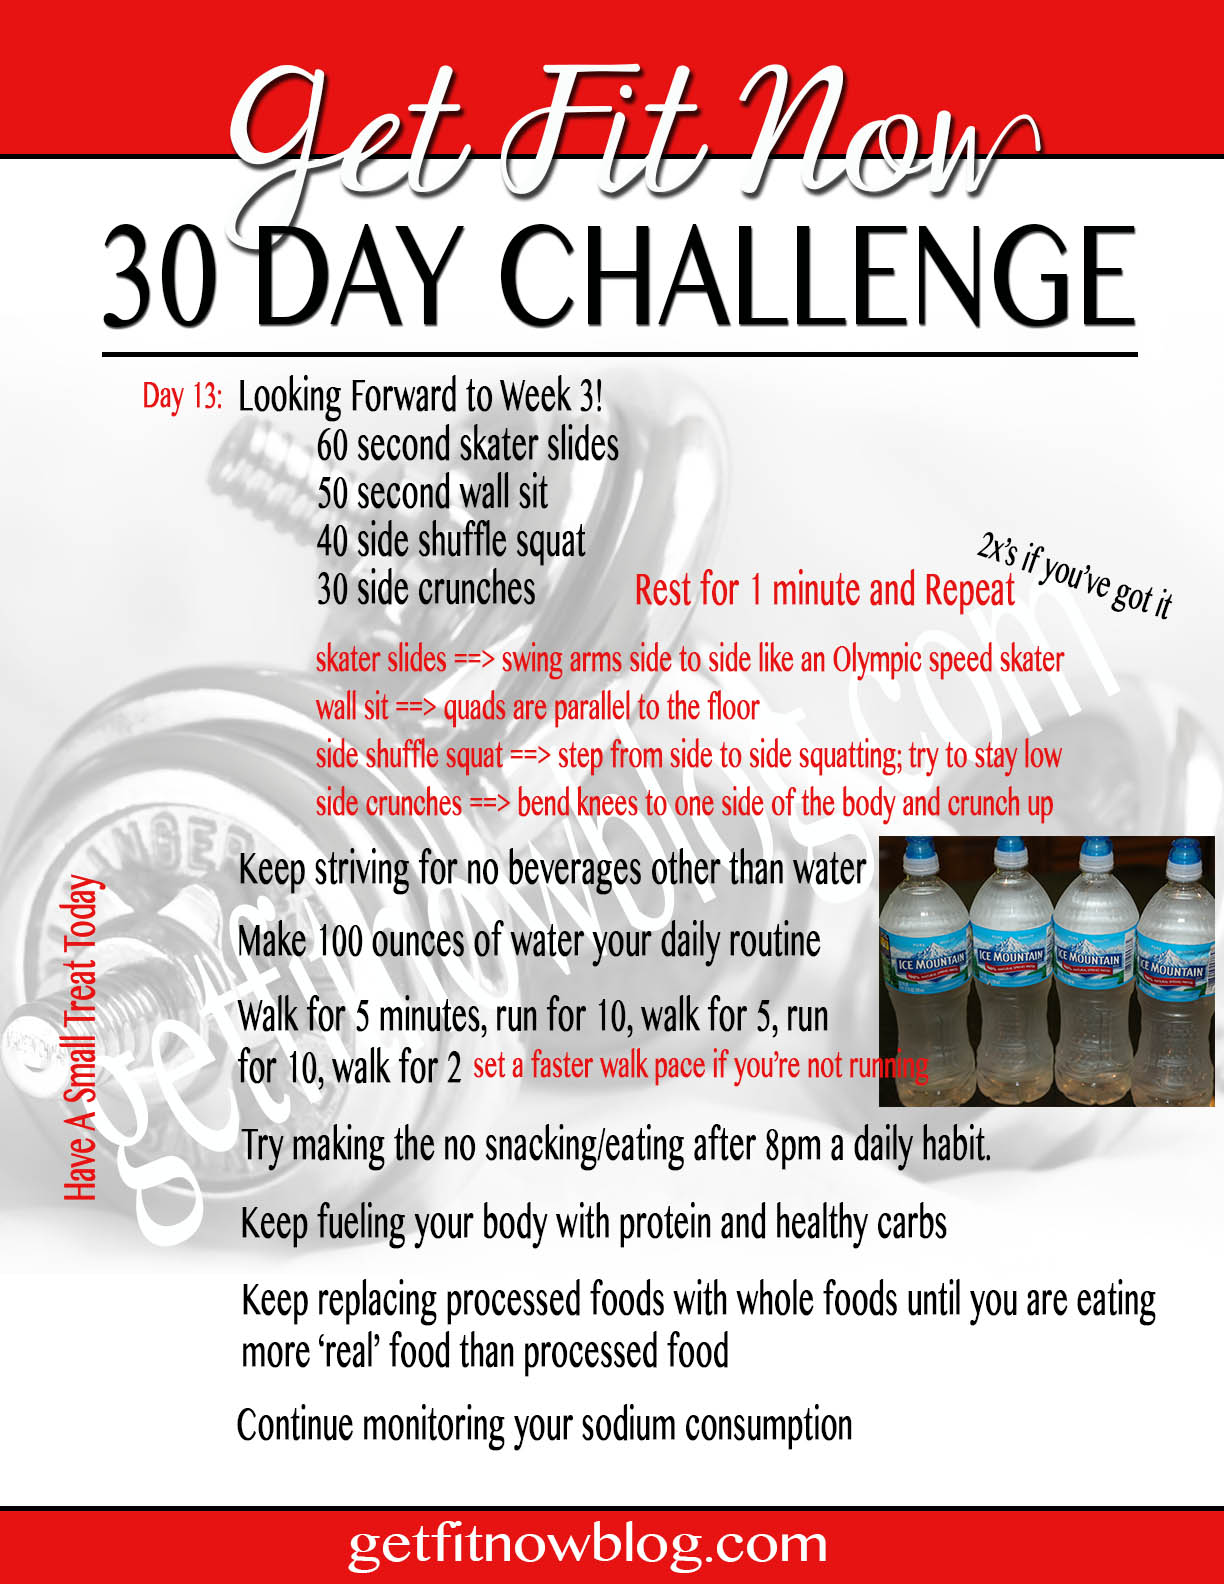 day 13 challenge